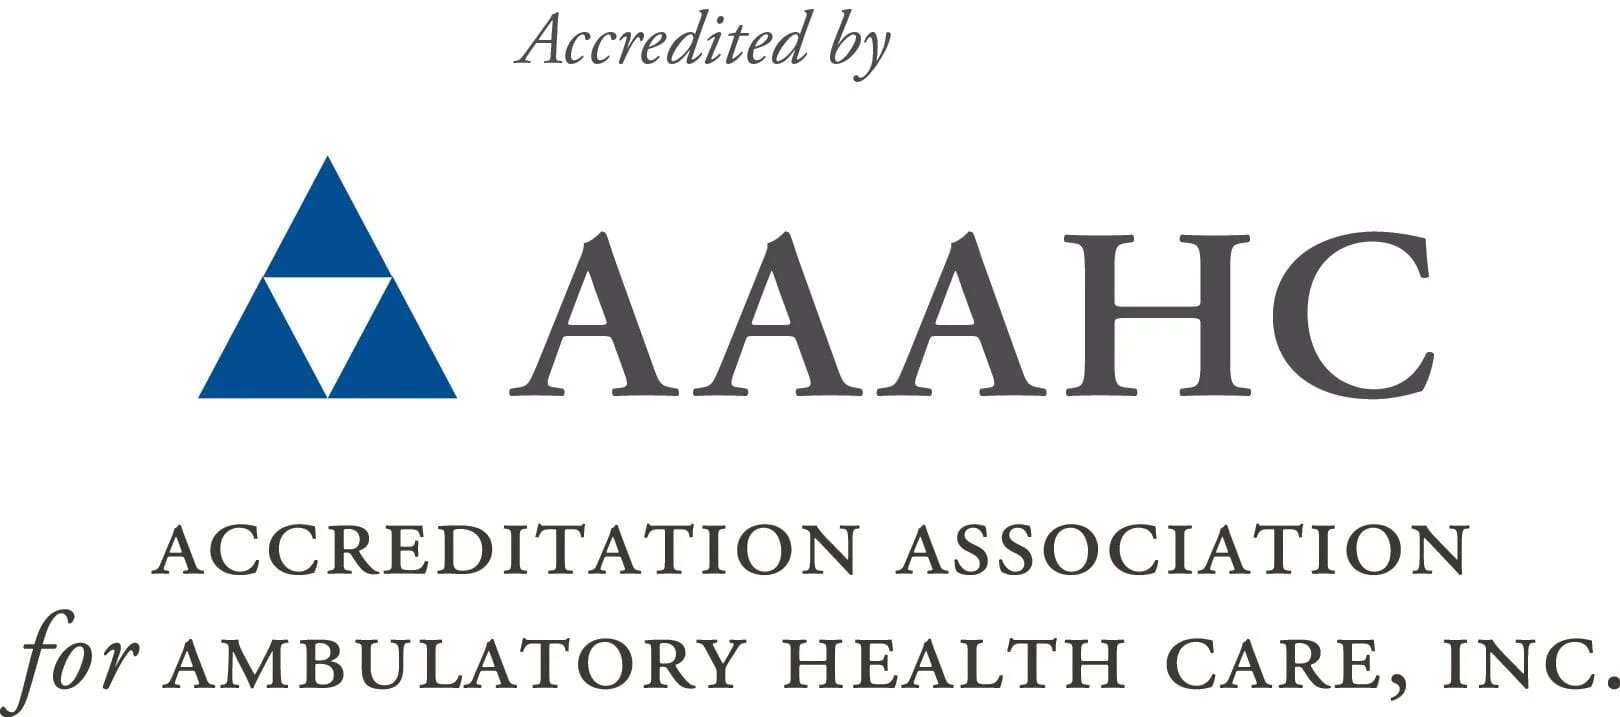 Accreditation association for ambulatory health care, INC.